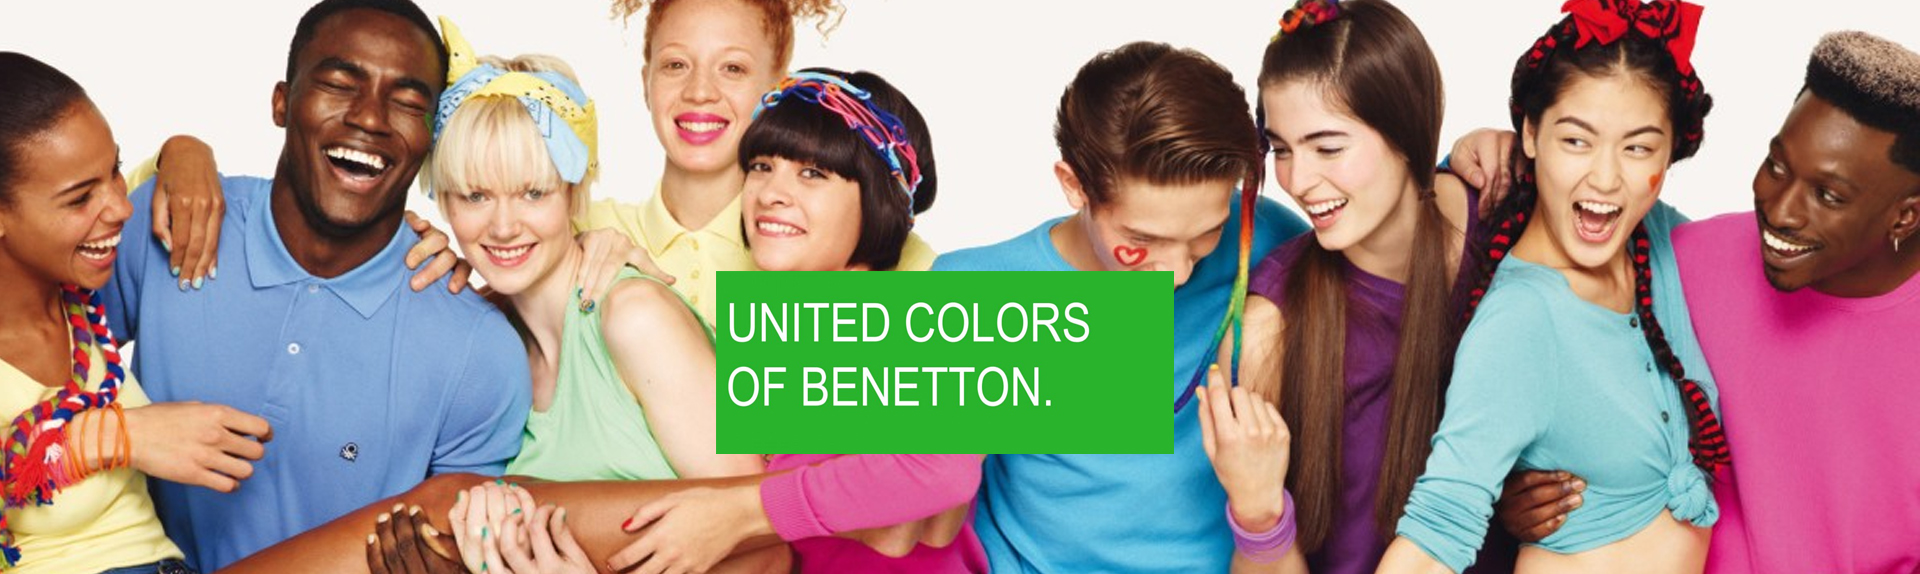 Unit colors. Benetton реклама. Рекламные кампании Benetton. Бенеттон баннер. Реклама Юнайтед Колорс оф Бенеттон.